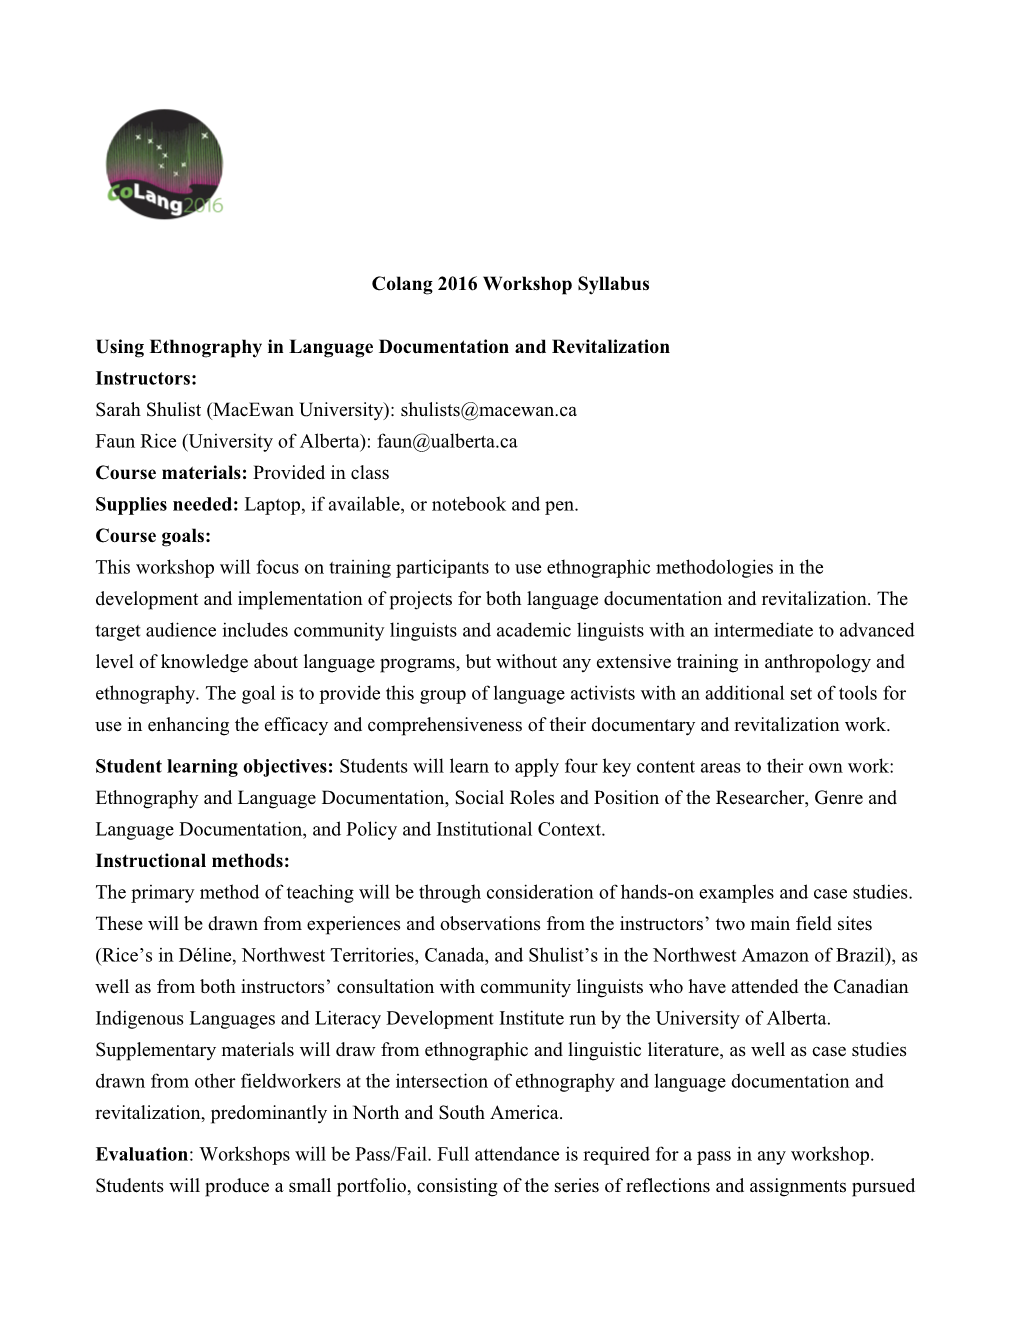 Using Ethnography in Language Documentation and Revitalization